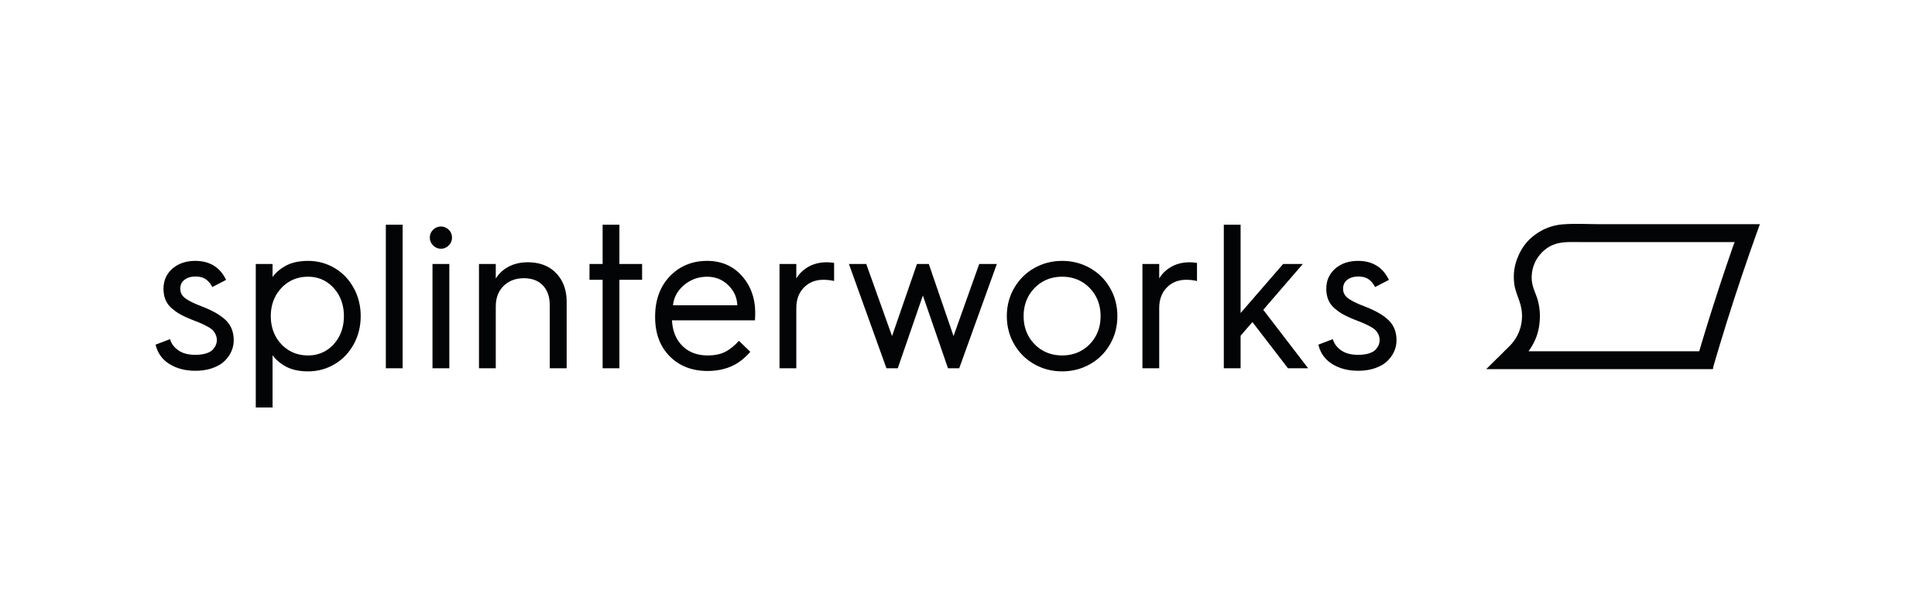 splinterworks_logo-977db83e